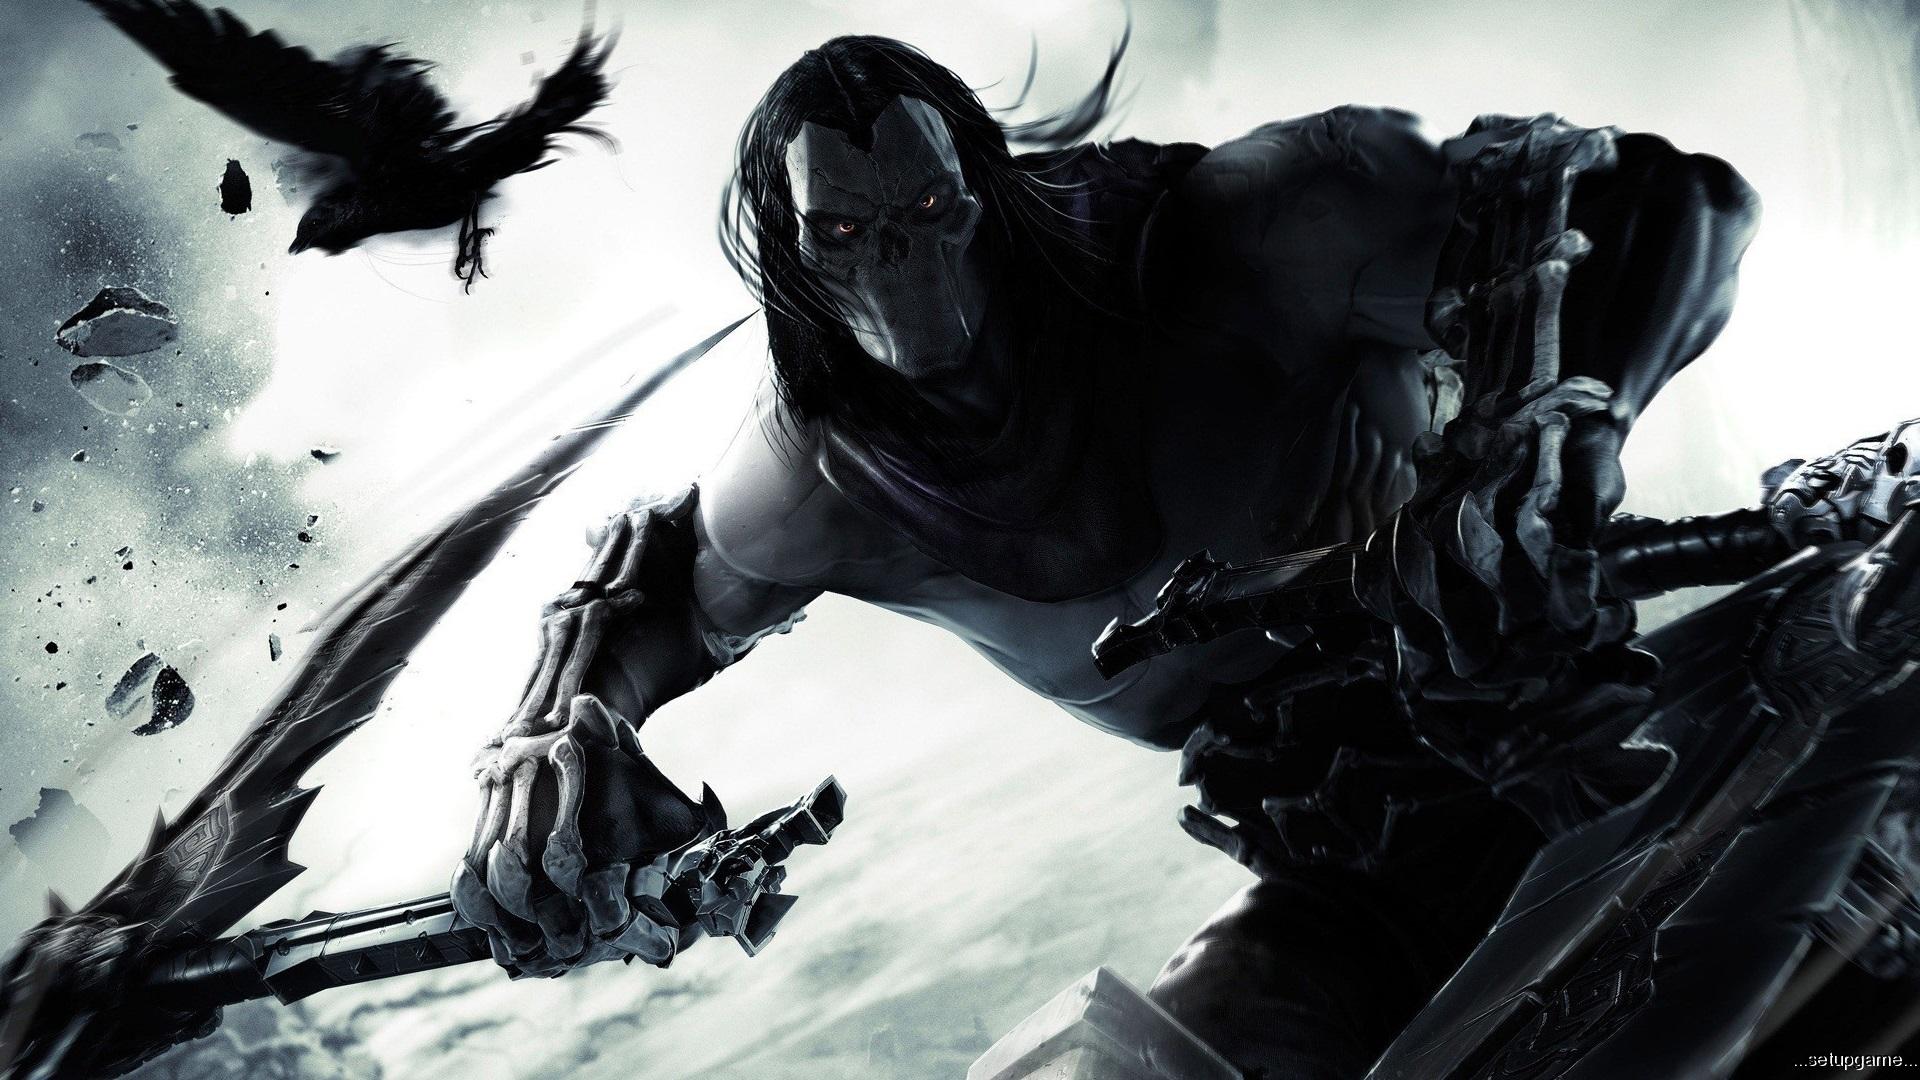 Darksiders II Deathinitive Edition بر روی PC نیز عرضه خواهد شد